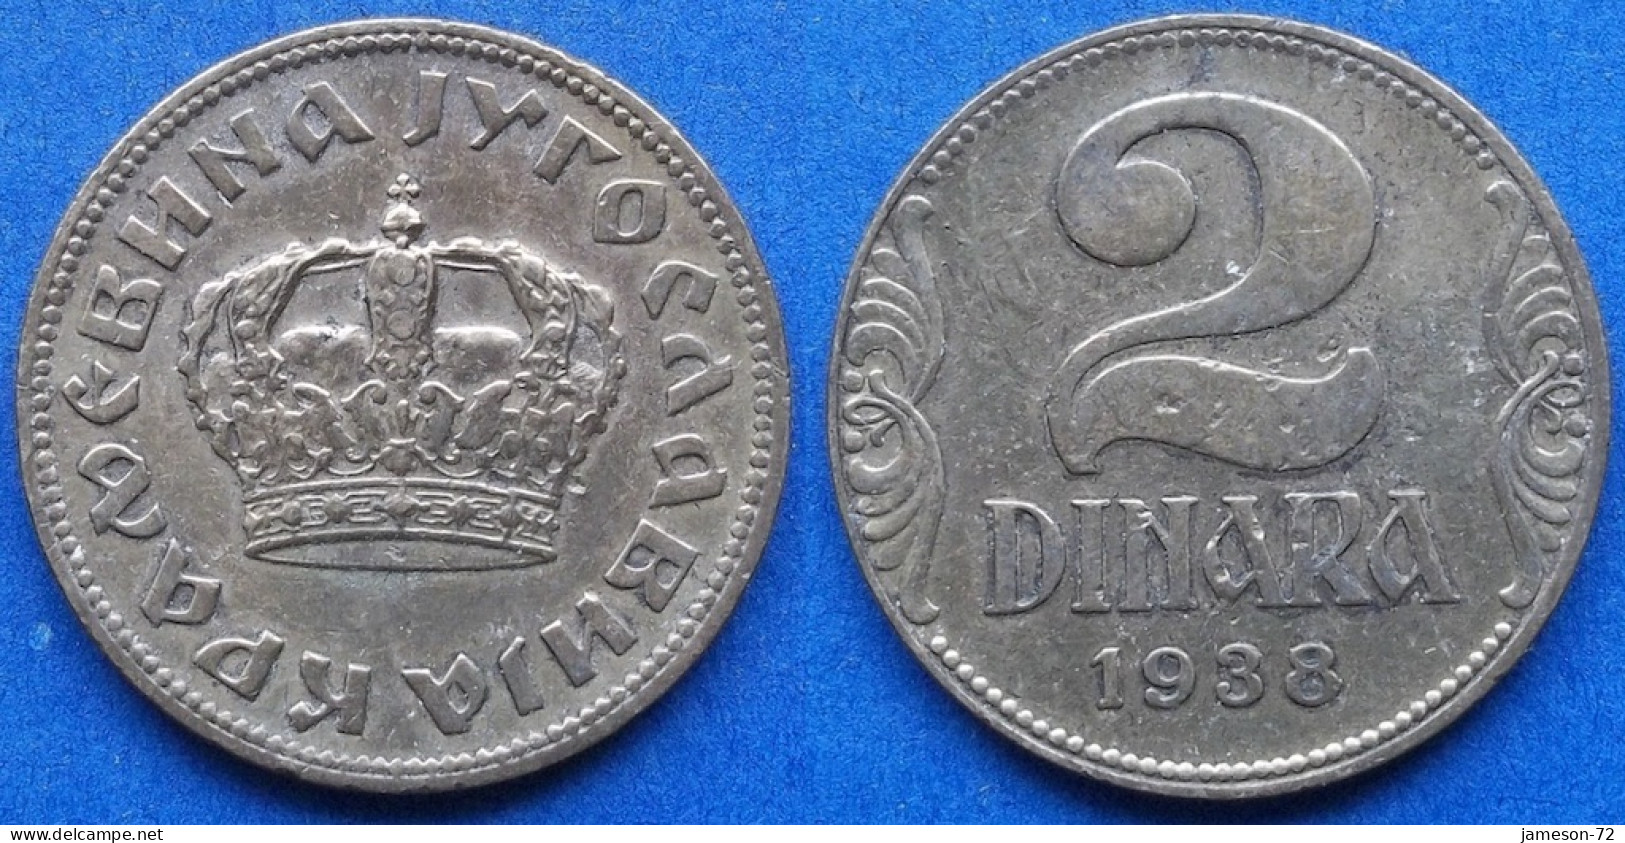 YUGOSLAVIA - 2 Dinara 1938 KM# 20 Peter II (1934-1945) - Edelweiss Coins - Yugoslavia